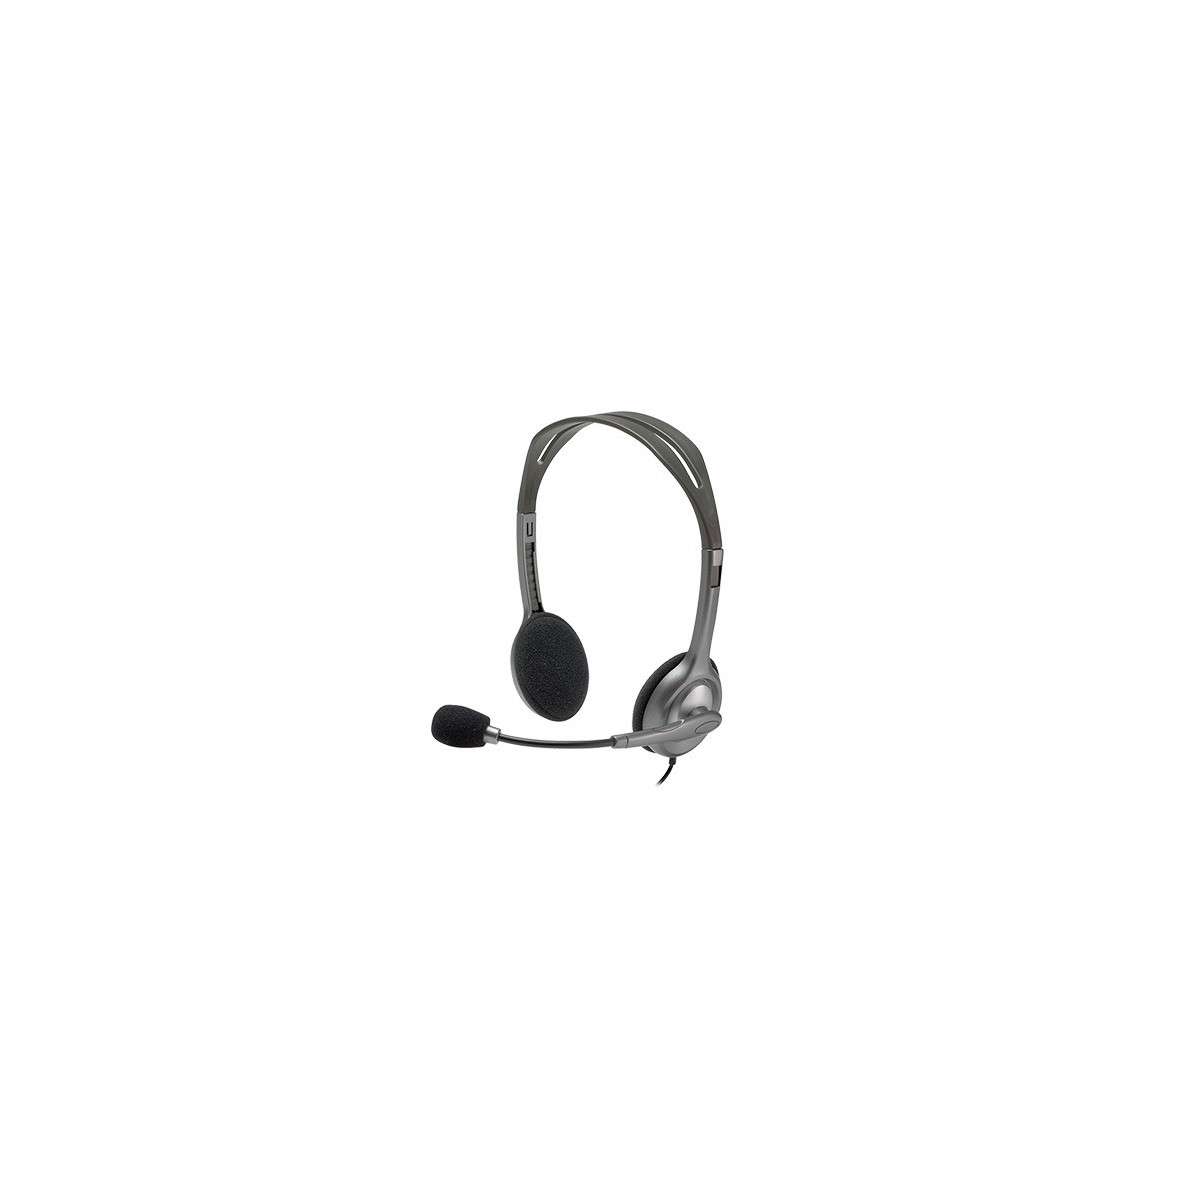 Auriculares de botón  Sony MDR-E9LPB, Iman de Neodimio, Jack 3.5 mm, Cable  Flexible, Negro